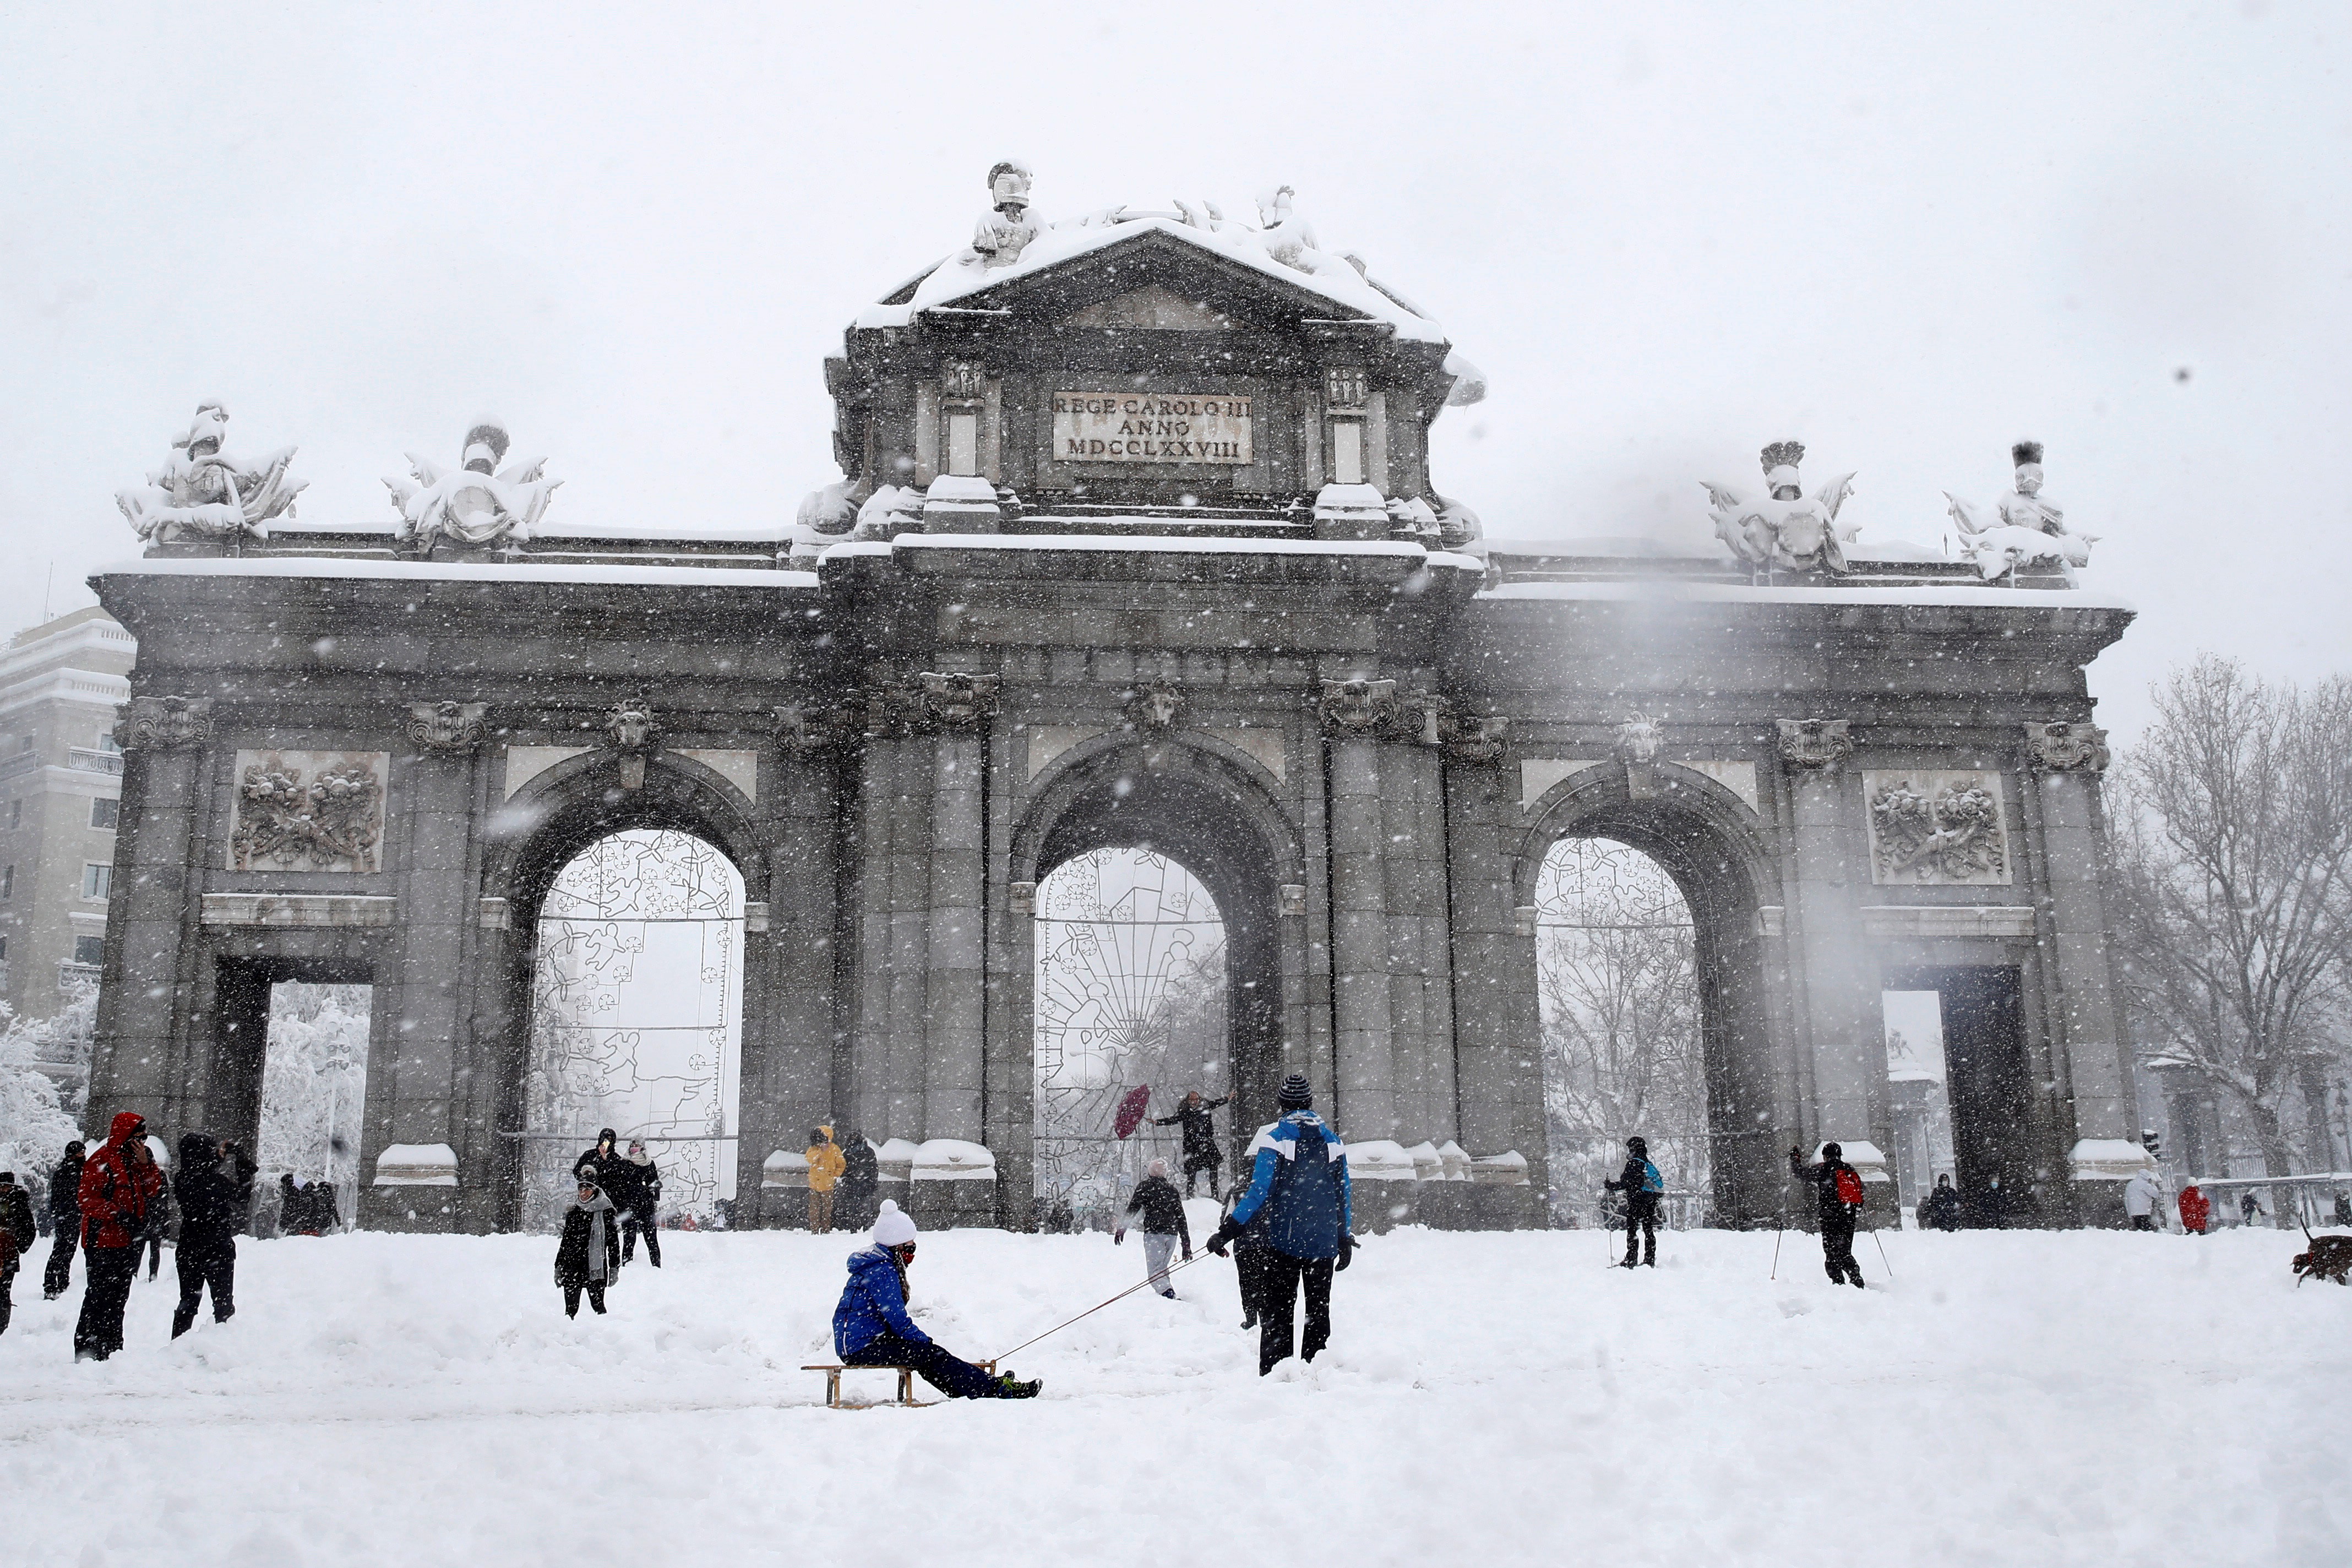 Madrid in the grip of Spain‘s heaviest snowfall in decades